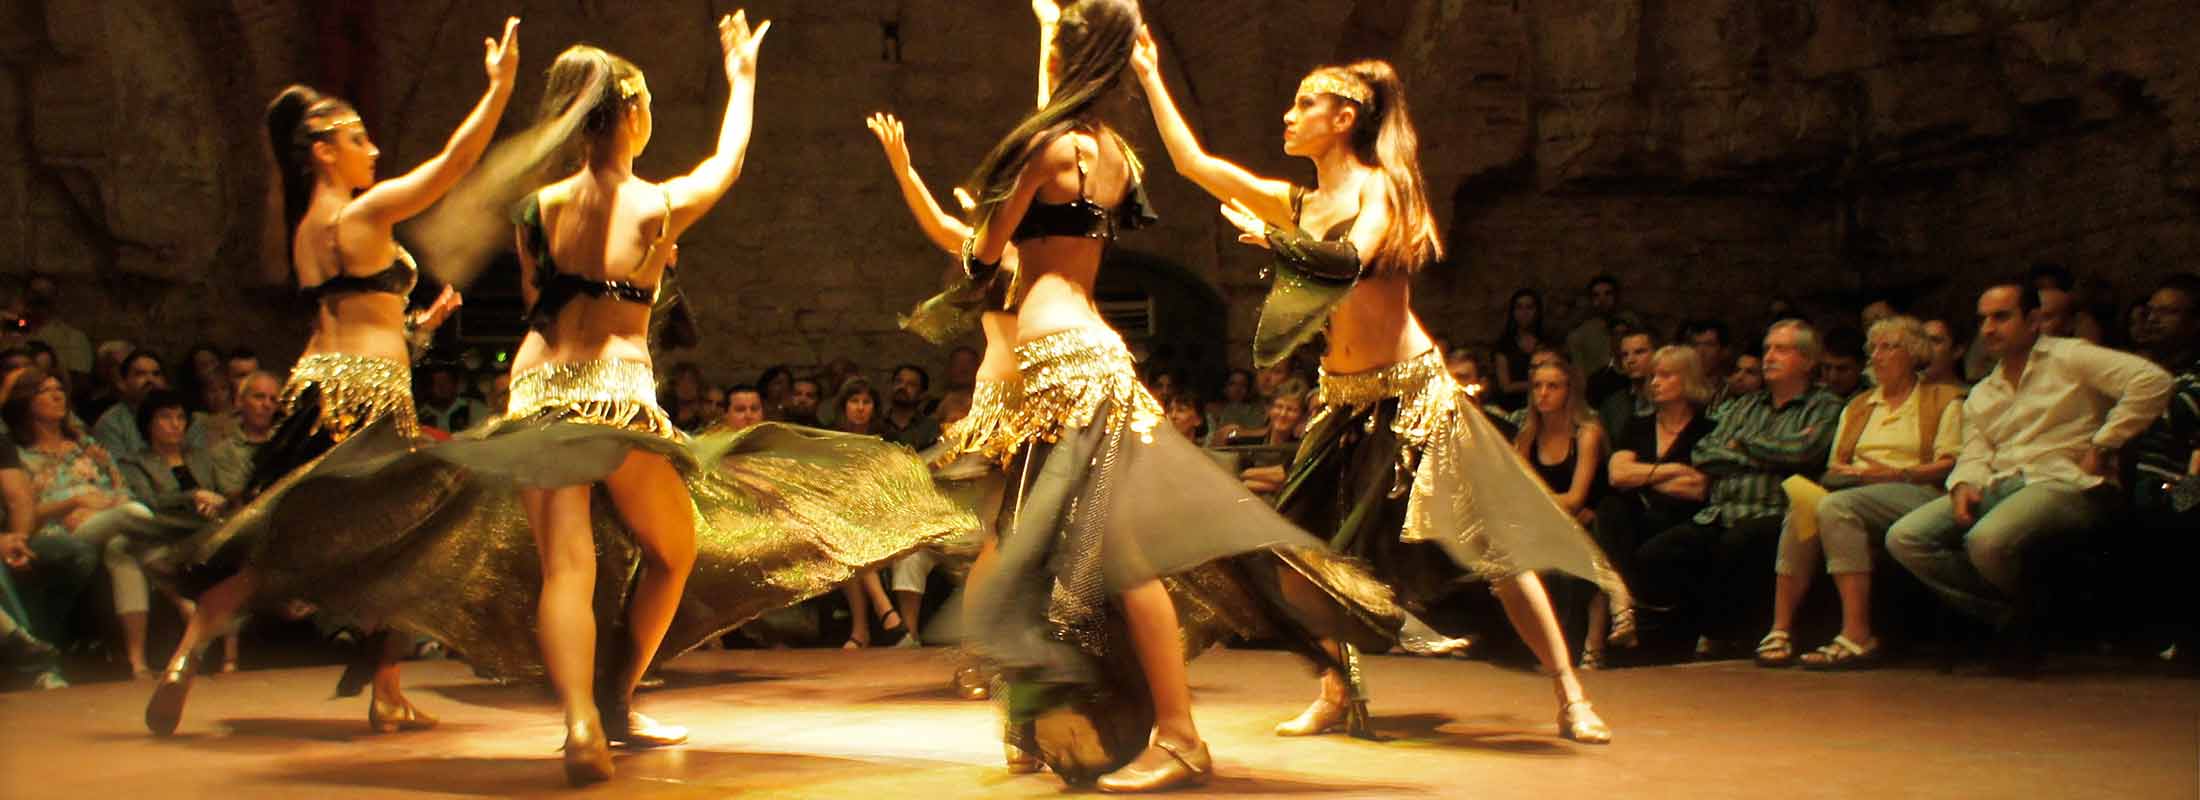 istanbul-turkish-dance-show-modern-folklore